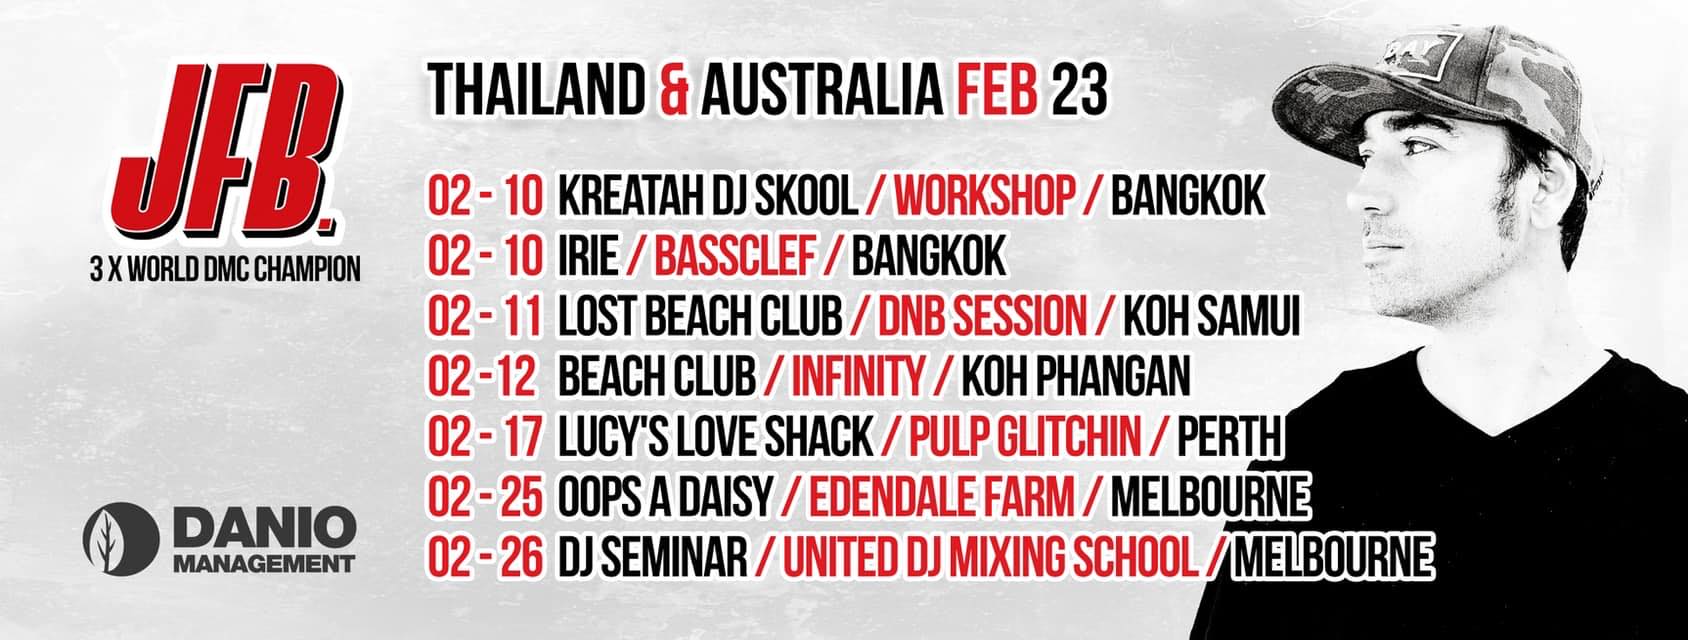 DJ JFB world DJ Champ DJ school Sydney Melbourne Australia